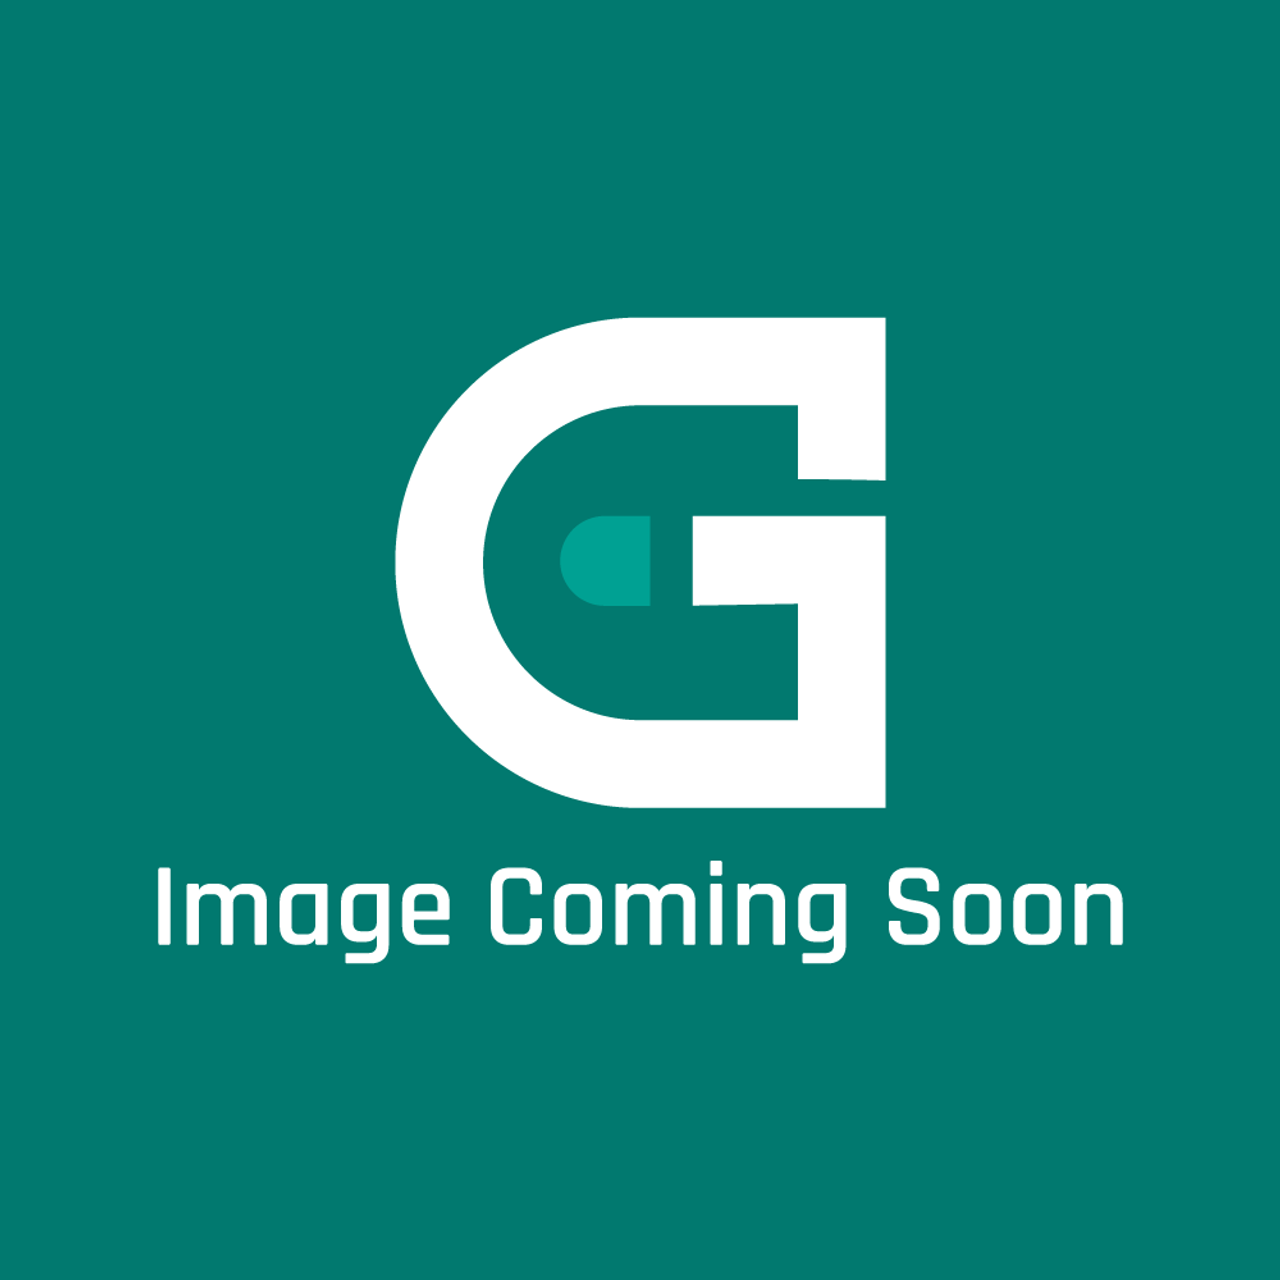 GE Appliances 69W43 - Lb-74940B Flame Sensor Kit (102431-02) - Image Coming Soon!